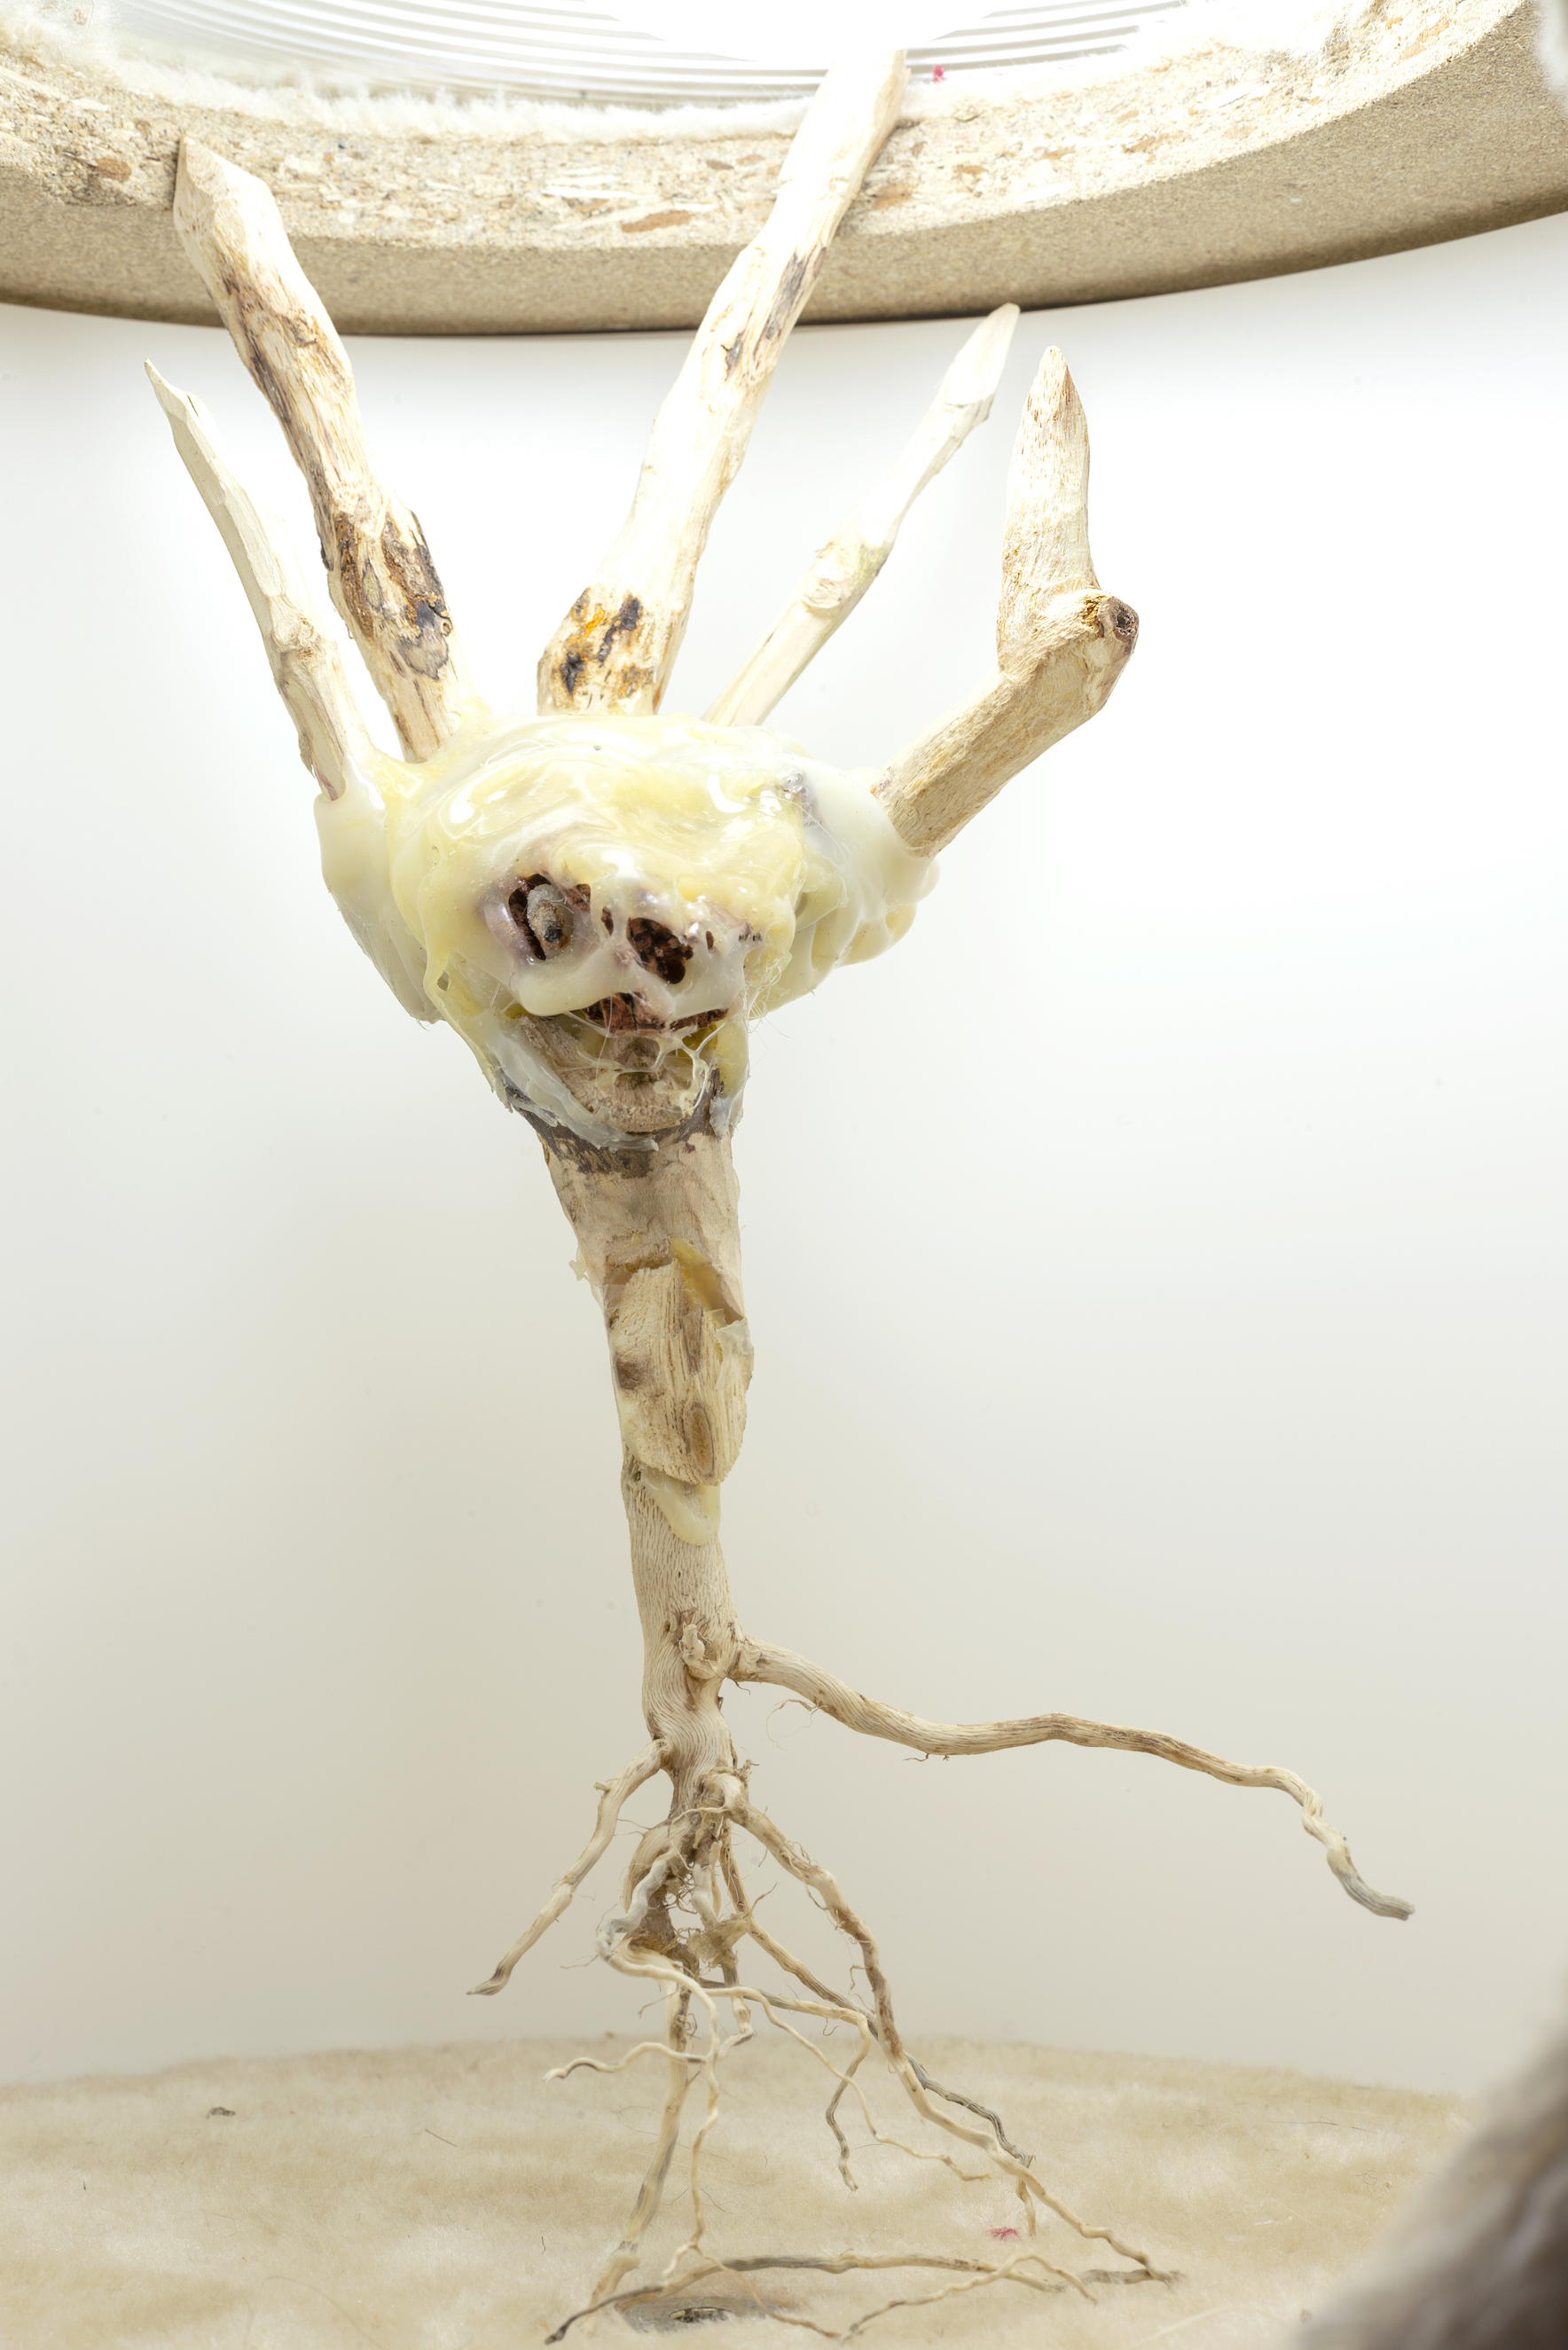  Kira Scerbin,  Baby brain stem , 2019, mixed media, 9 x 5 x 4 inches 